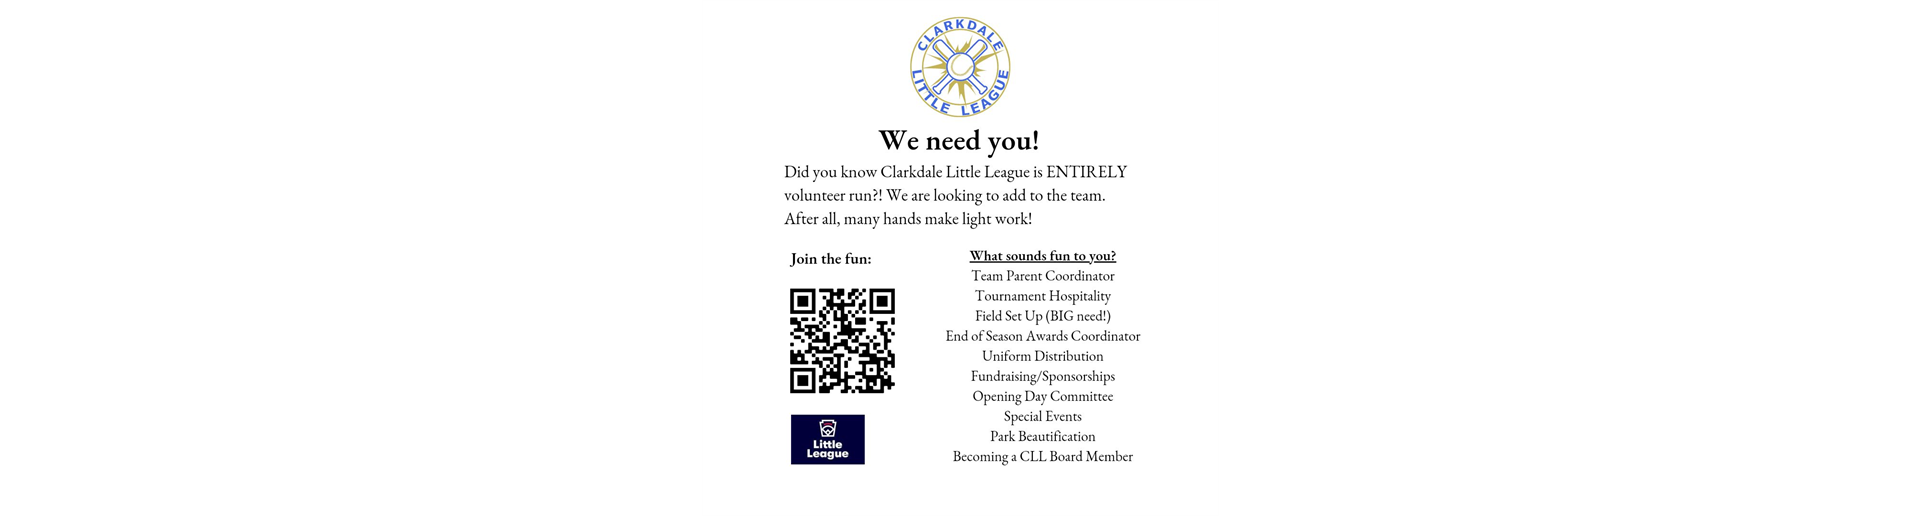 Clarkdale Little League needs you